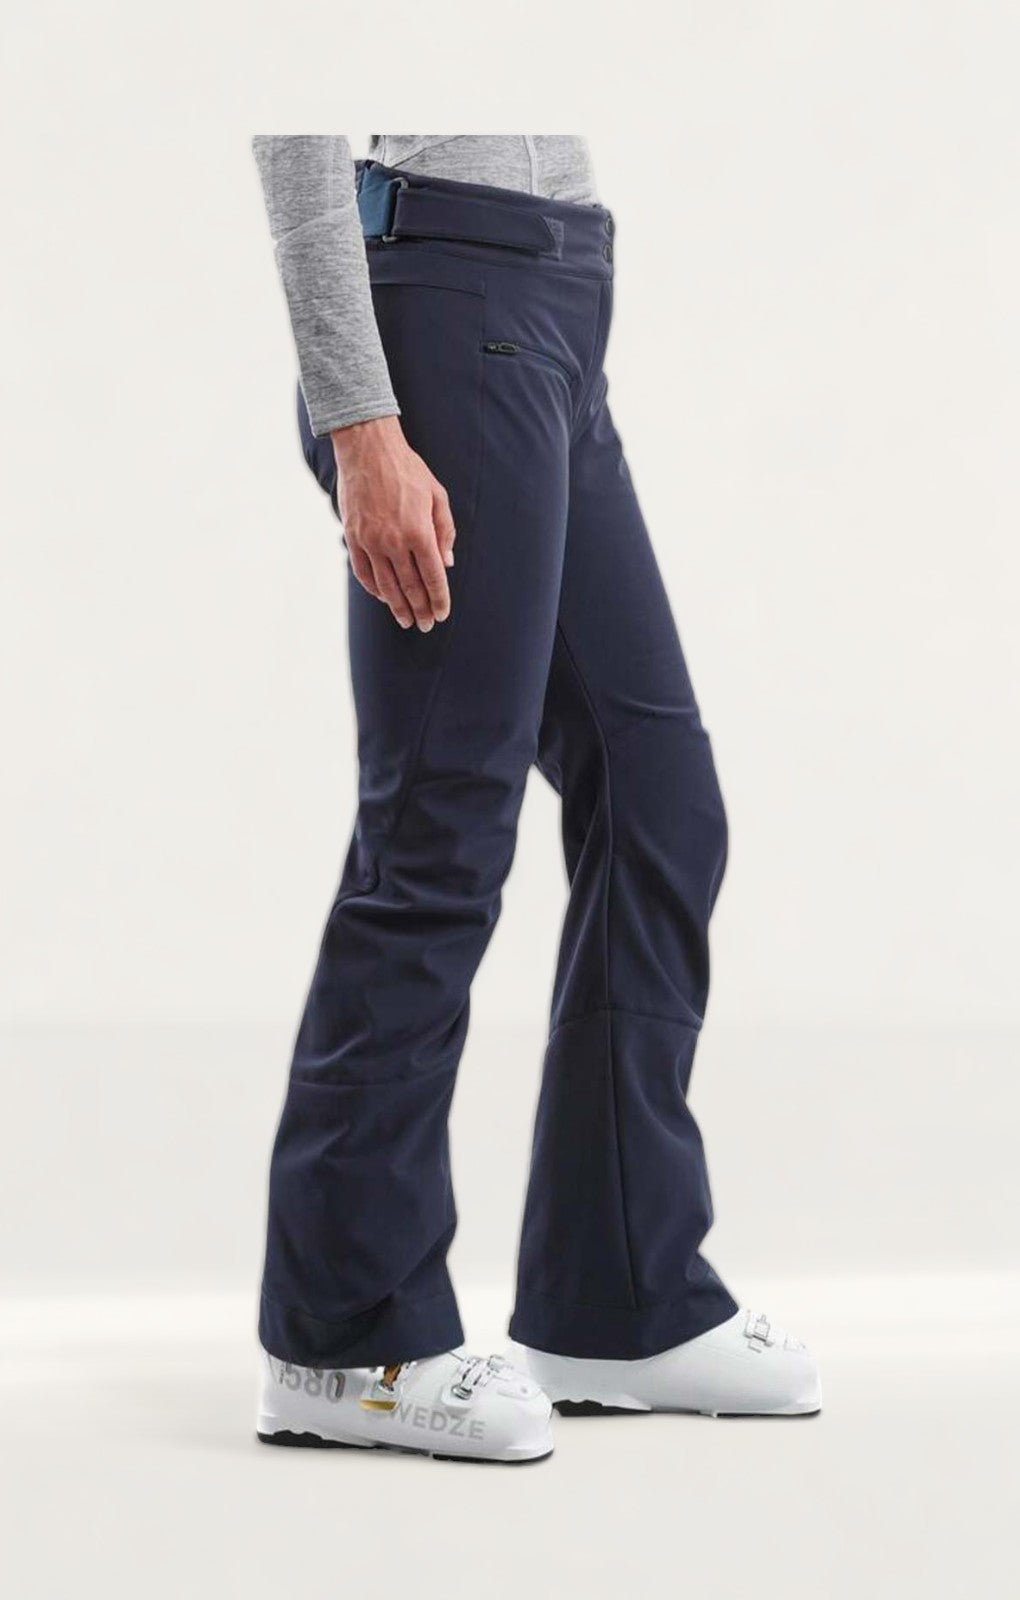 Decathlon Navy Women's Downhill Ski Trousers product image